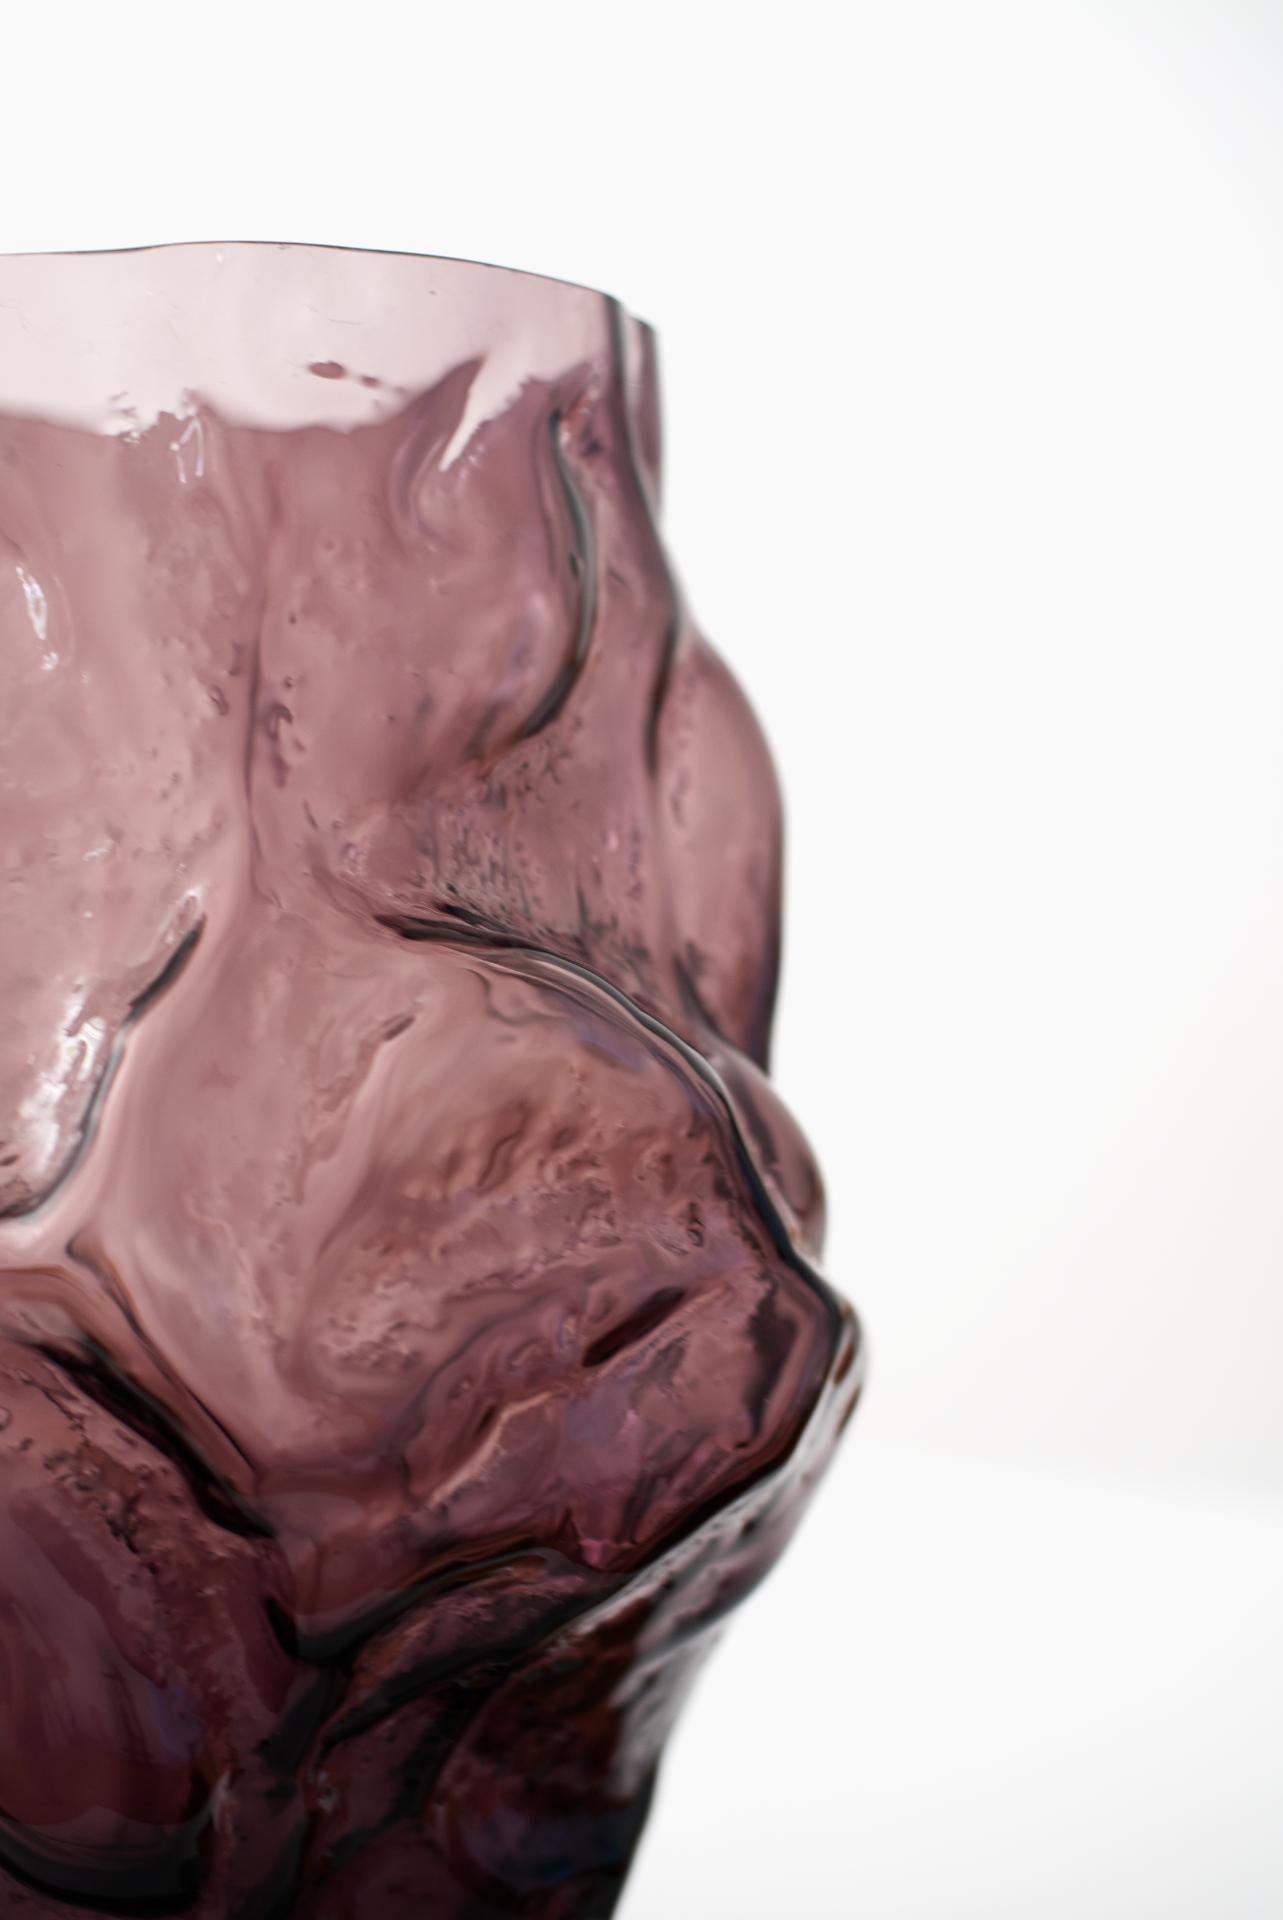 Danish Contemporary Design Unique Glass 'Mountain' Vase by Fos, Purple